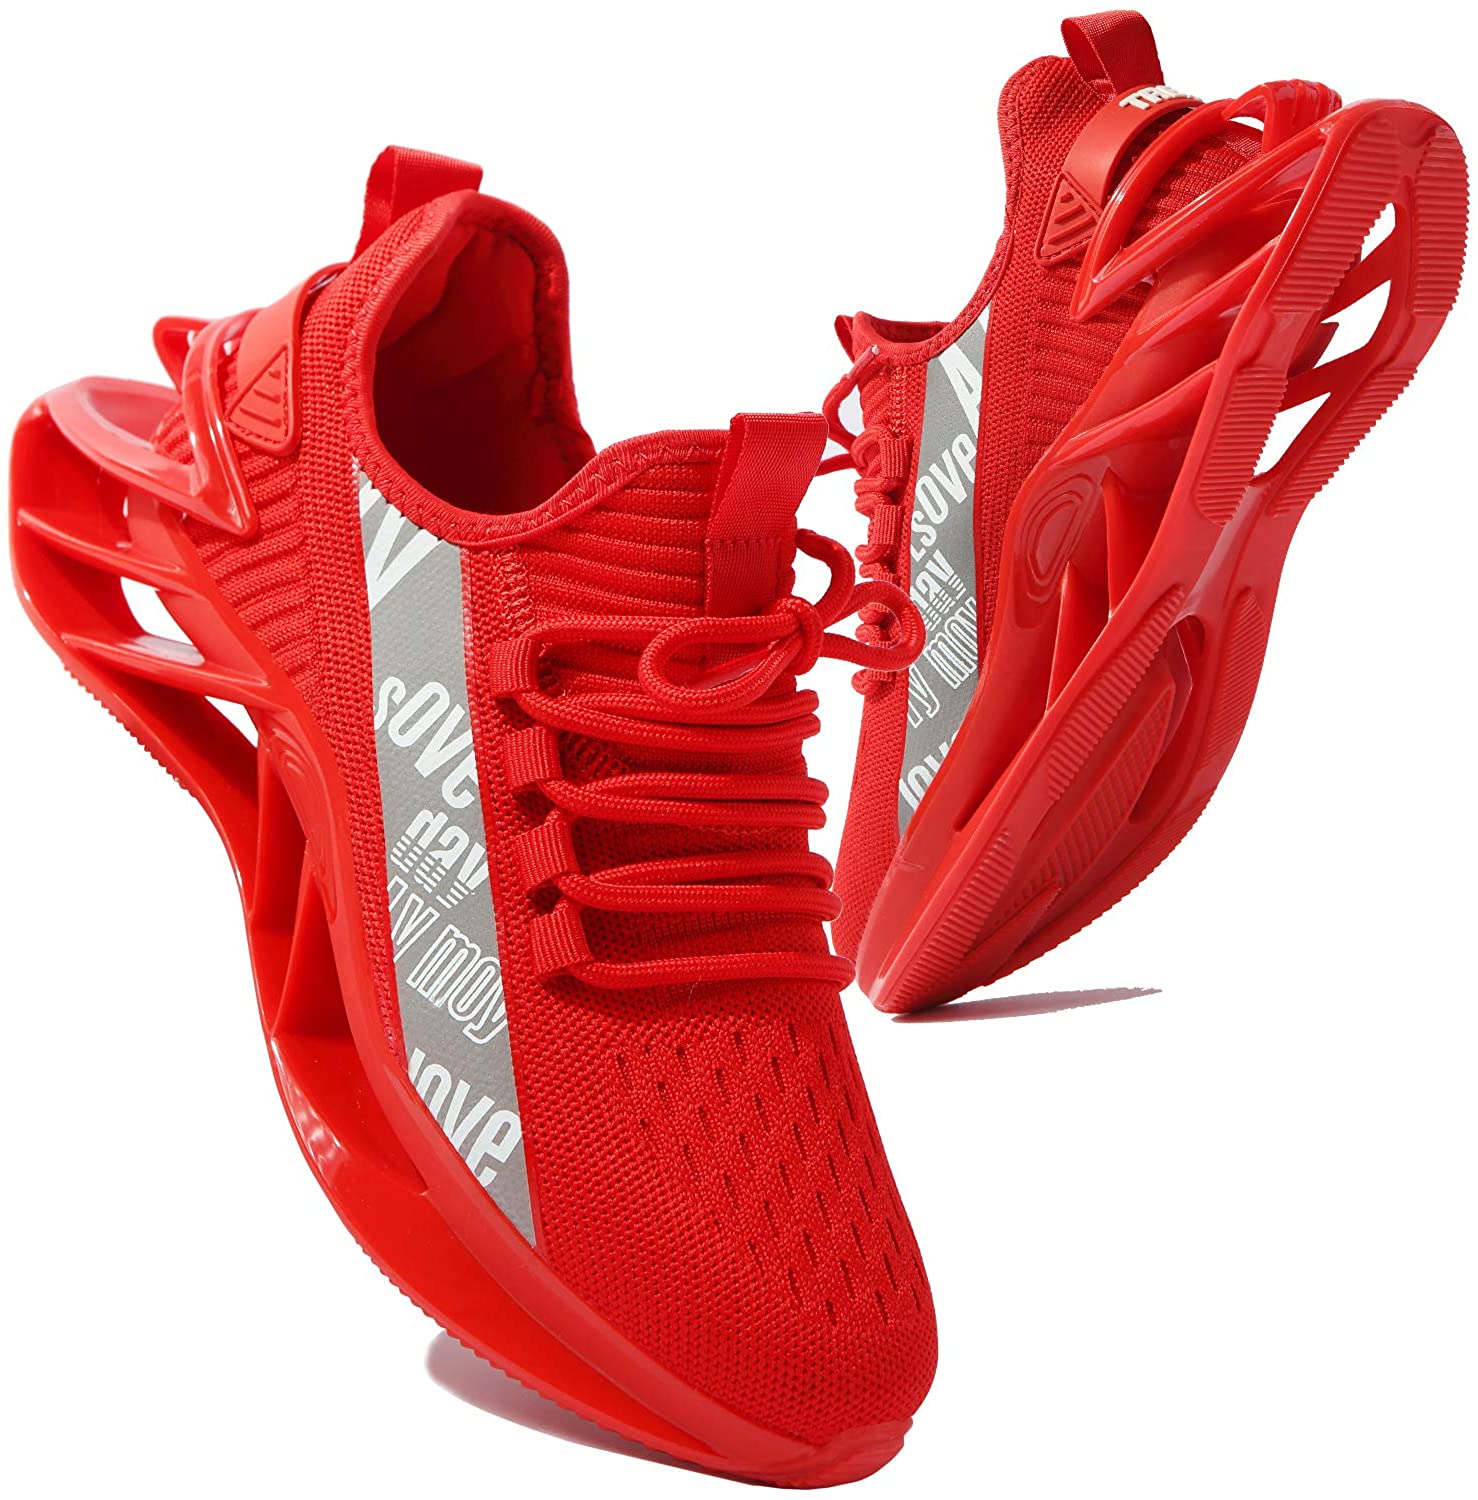 kokib Men's Running Sports Walking Shoes Mesh Lightweight Breathable Athletic Jogging Fashion Sneakers Sneakers Tennis Blade 